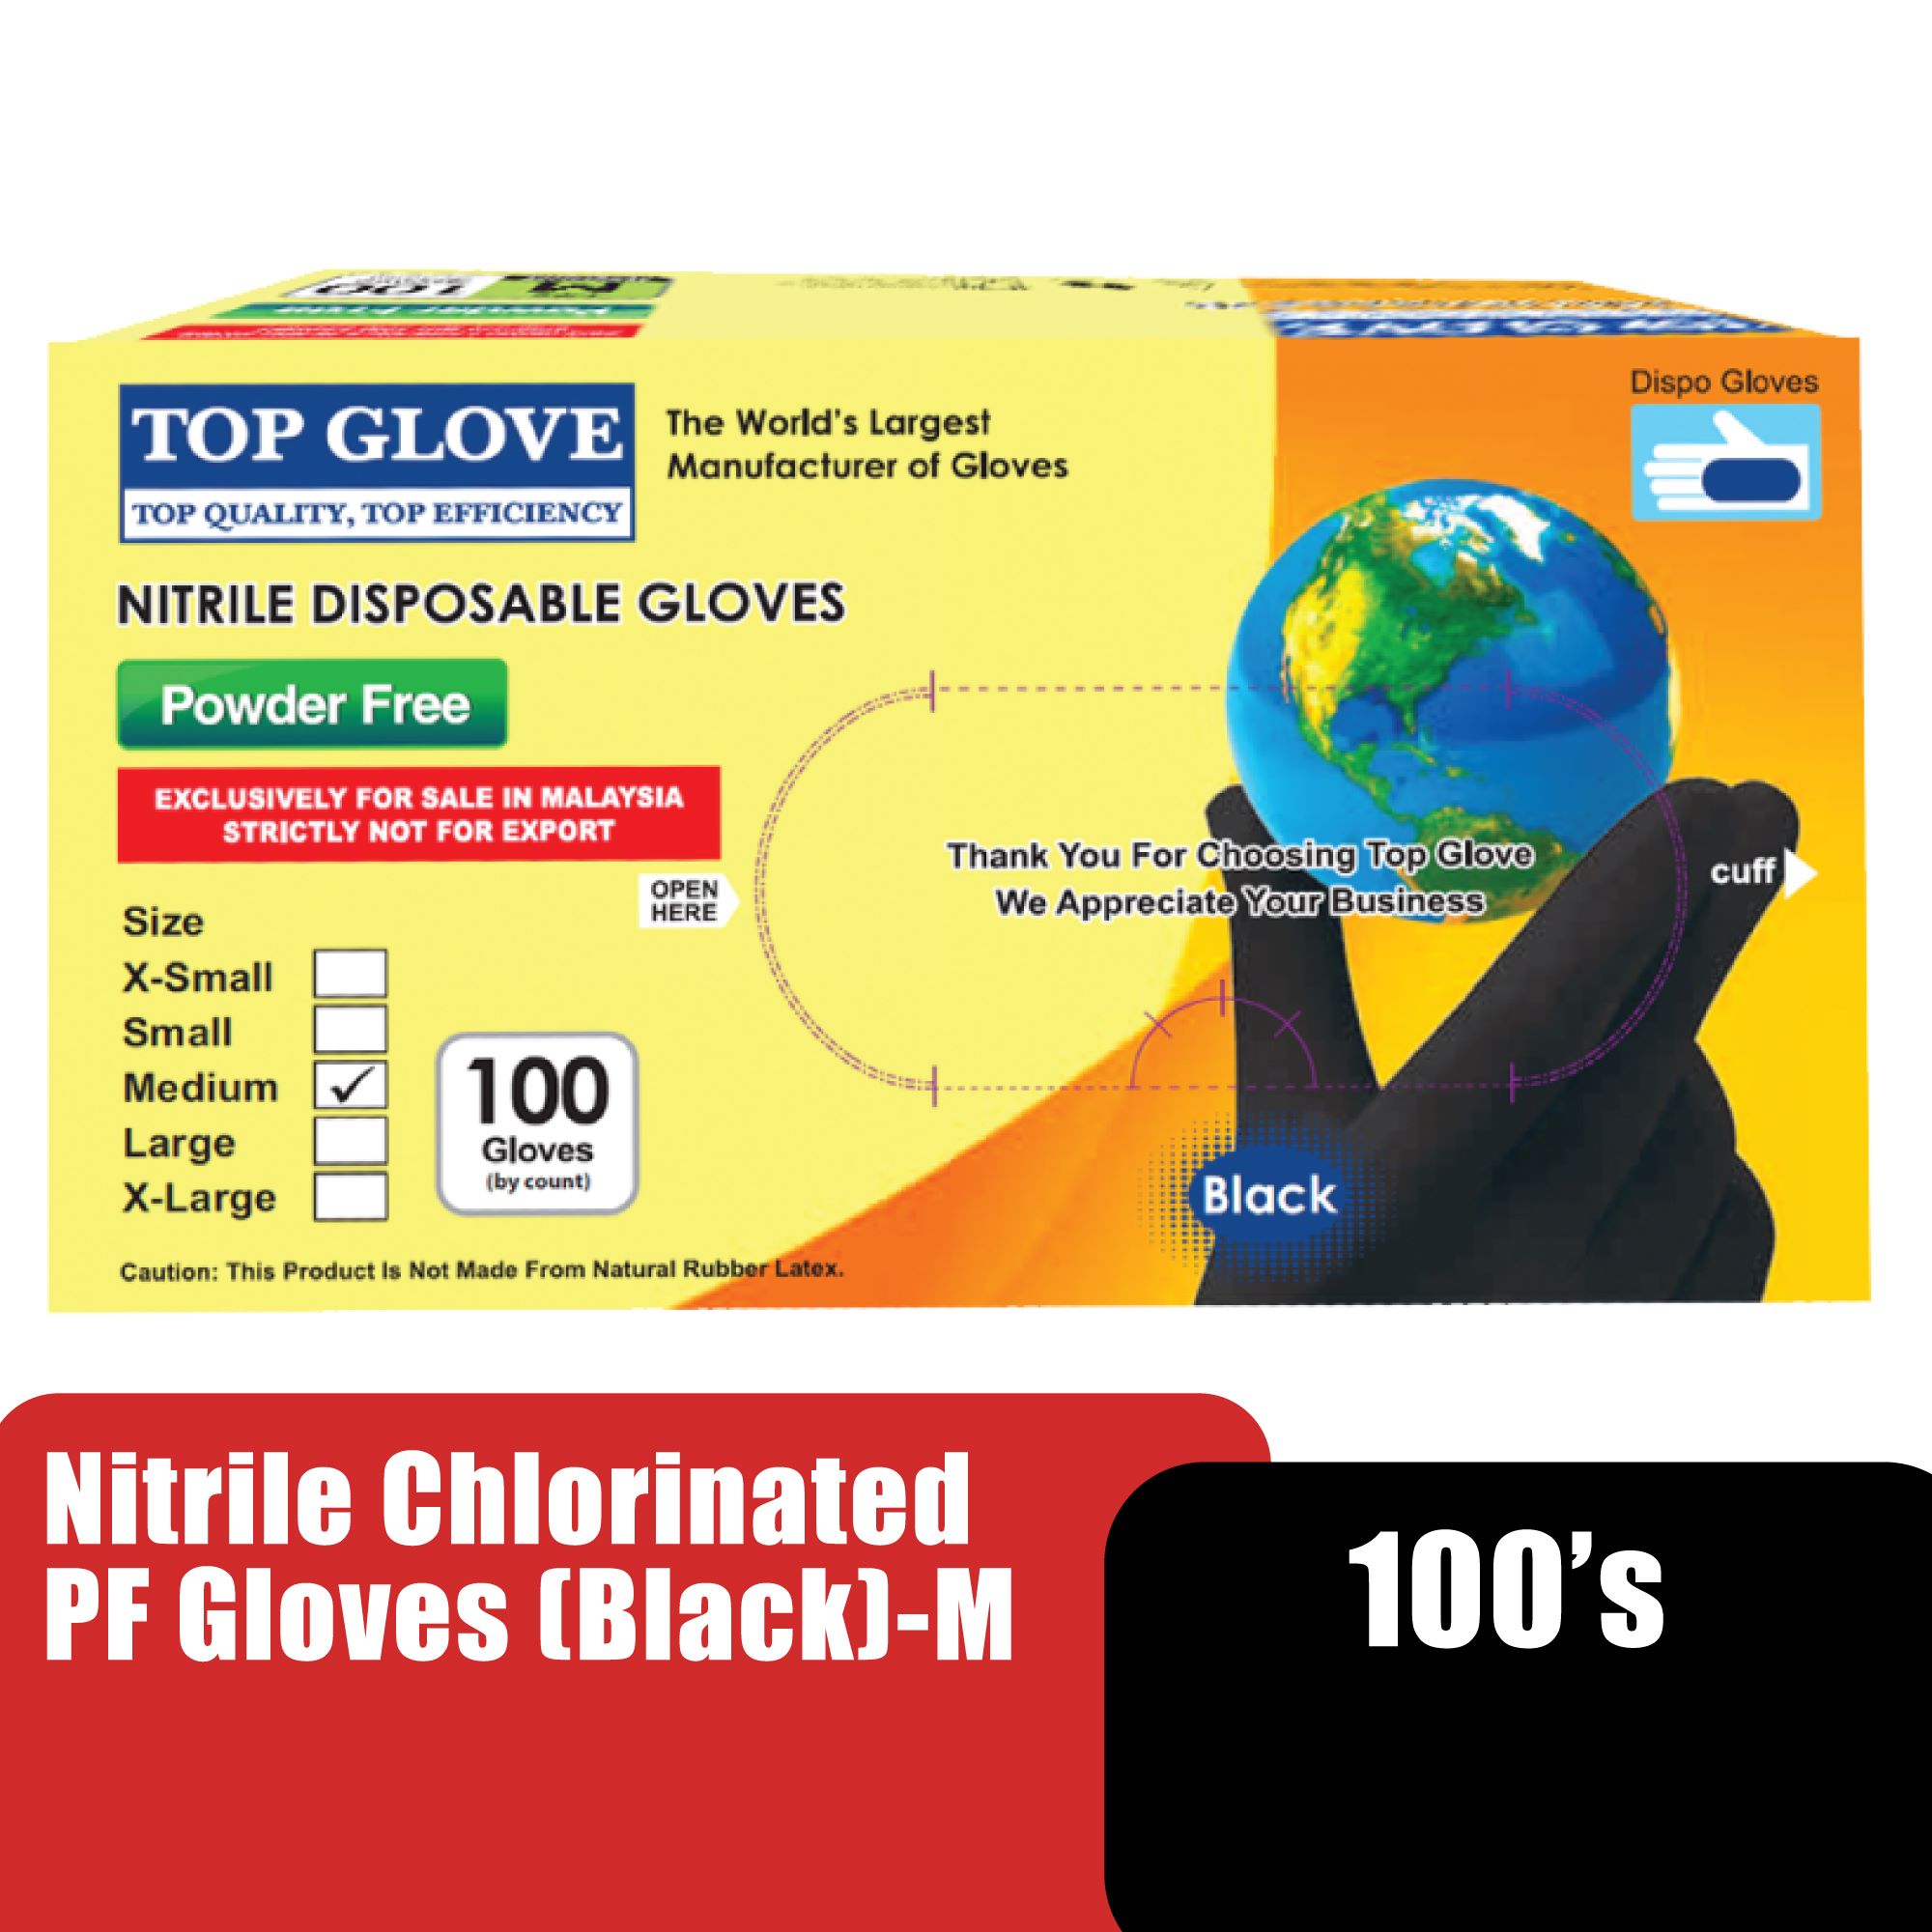 TOP GLOVE NITRILE CHLORINATED PF GLOVES (BLACK) 100'S - M